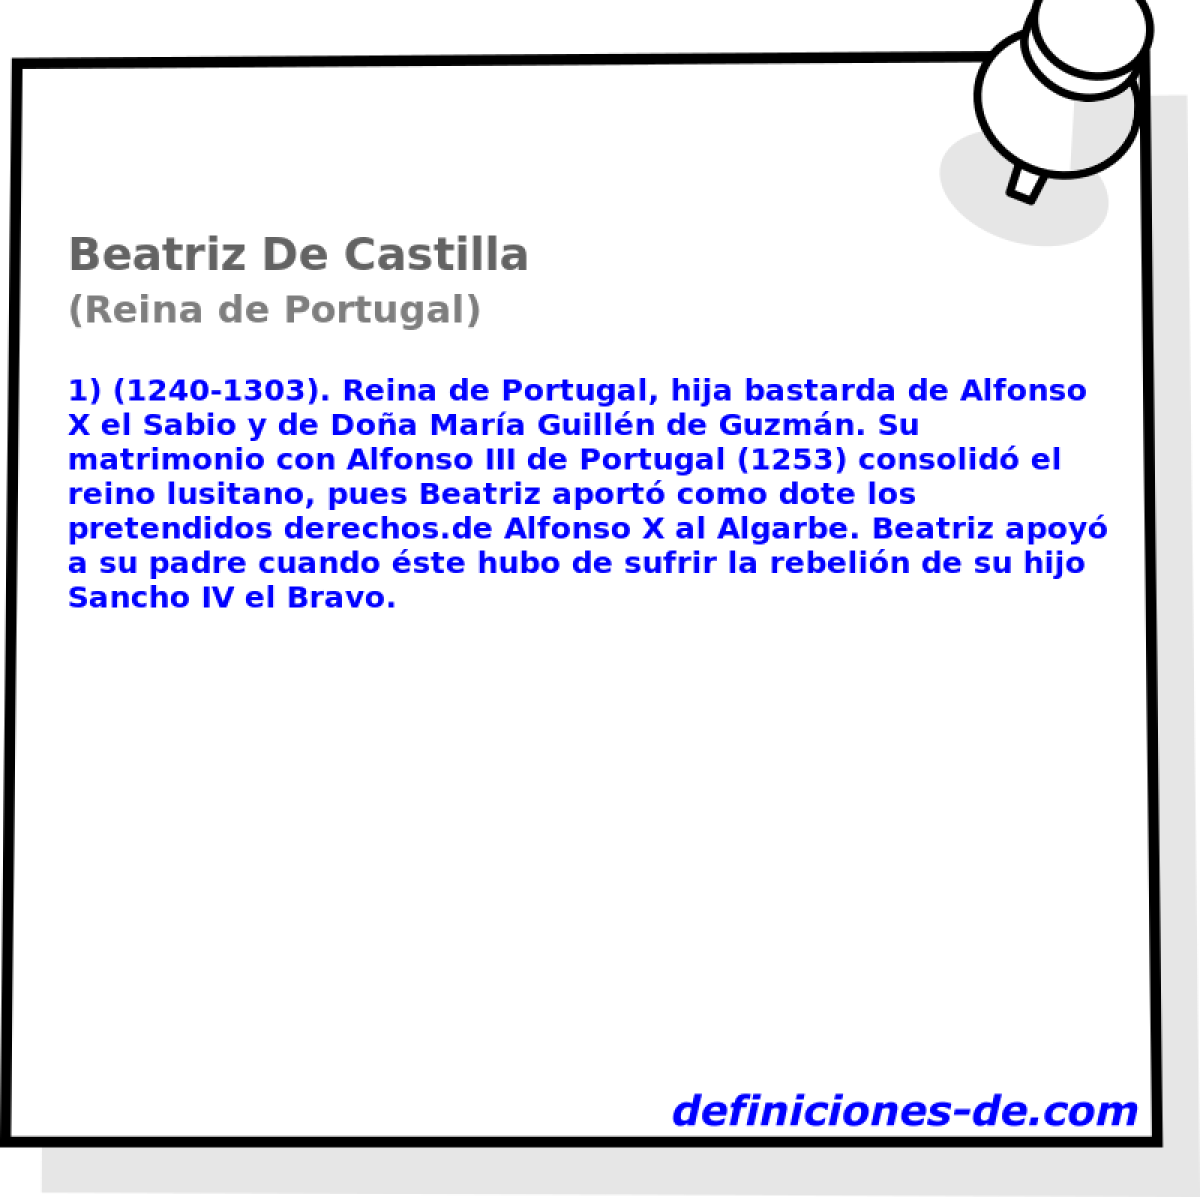 Beatriz De Castilla (Reina de Portugal)